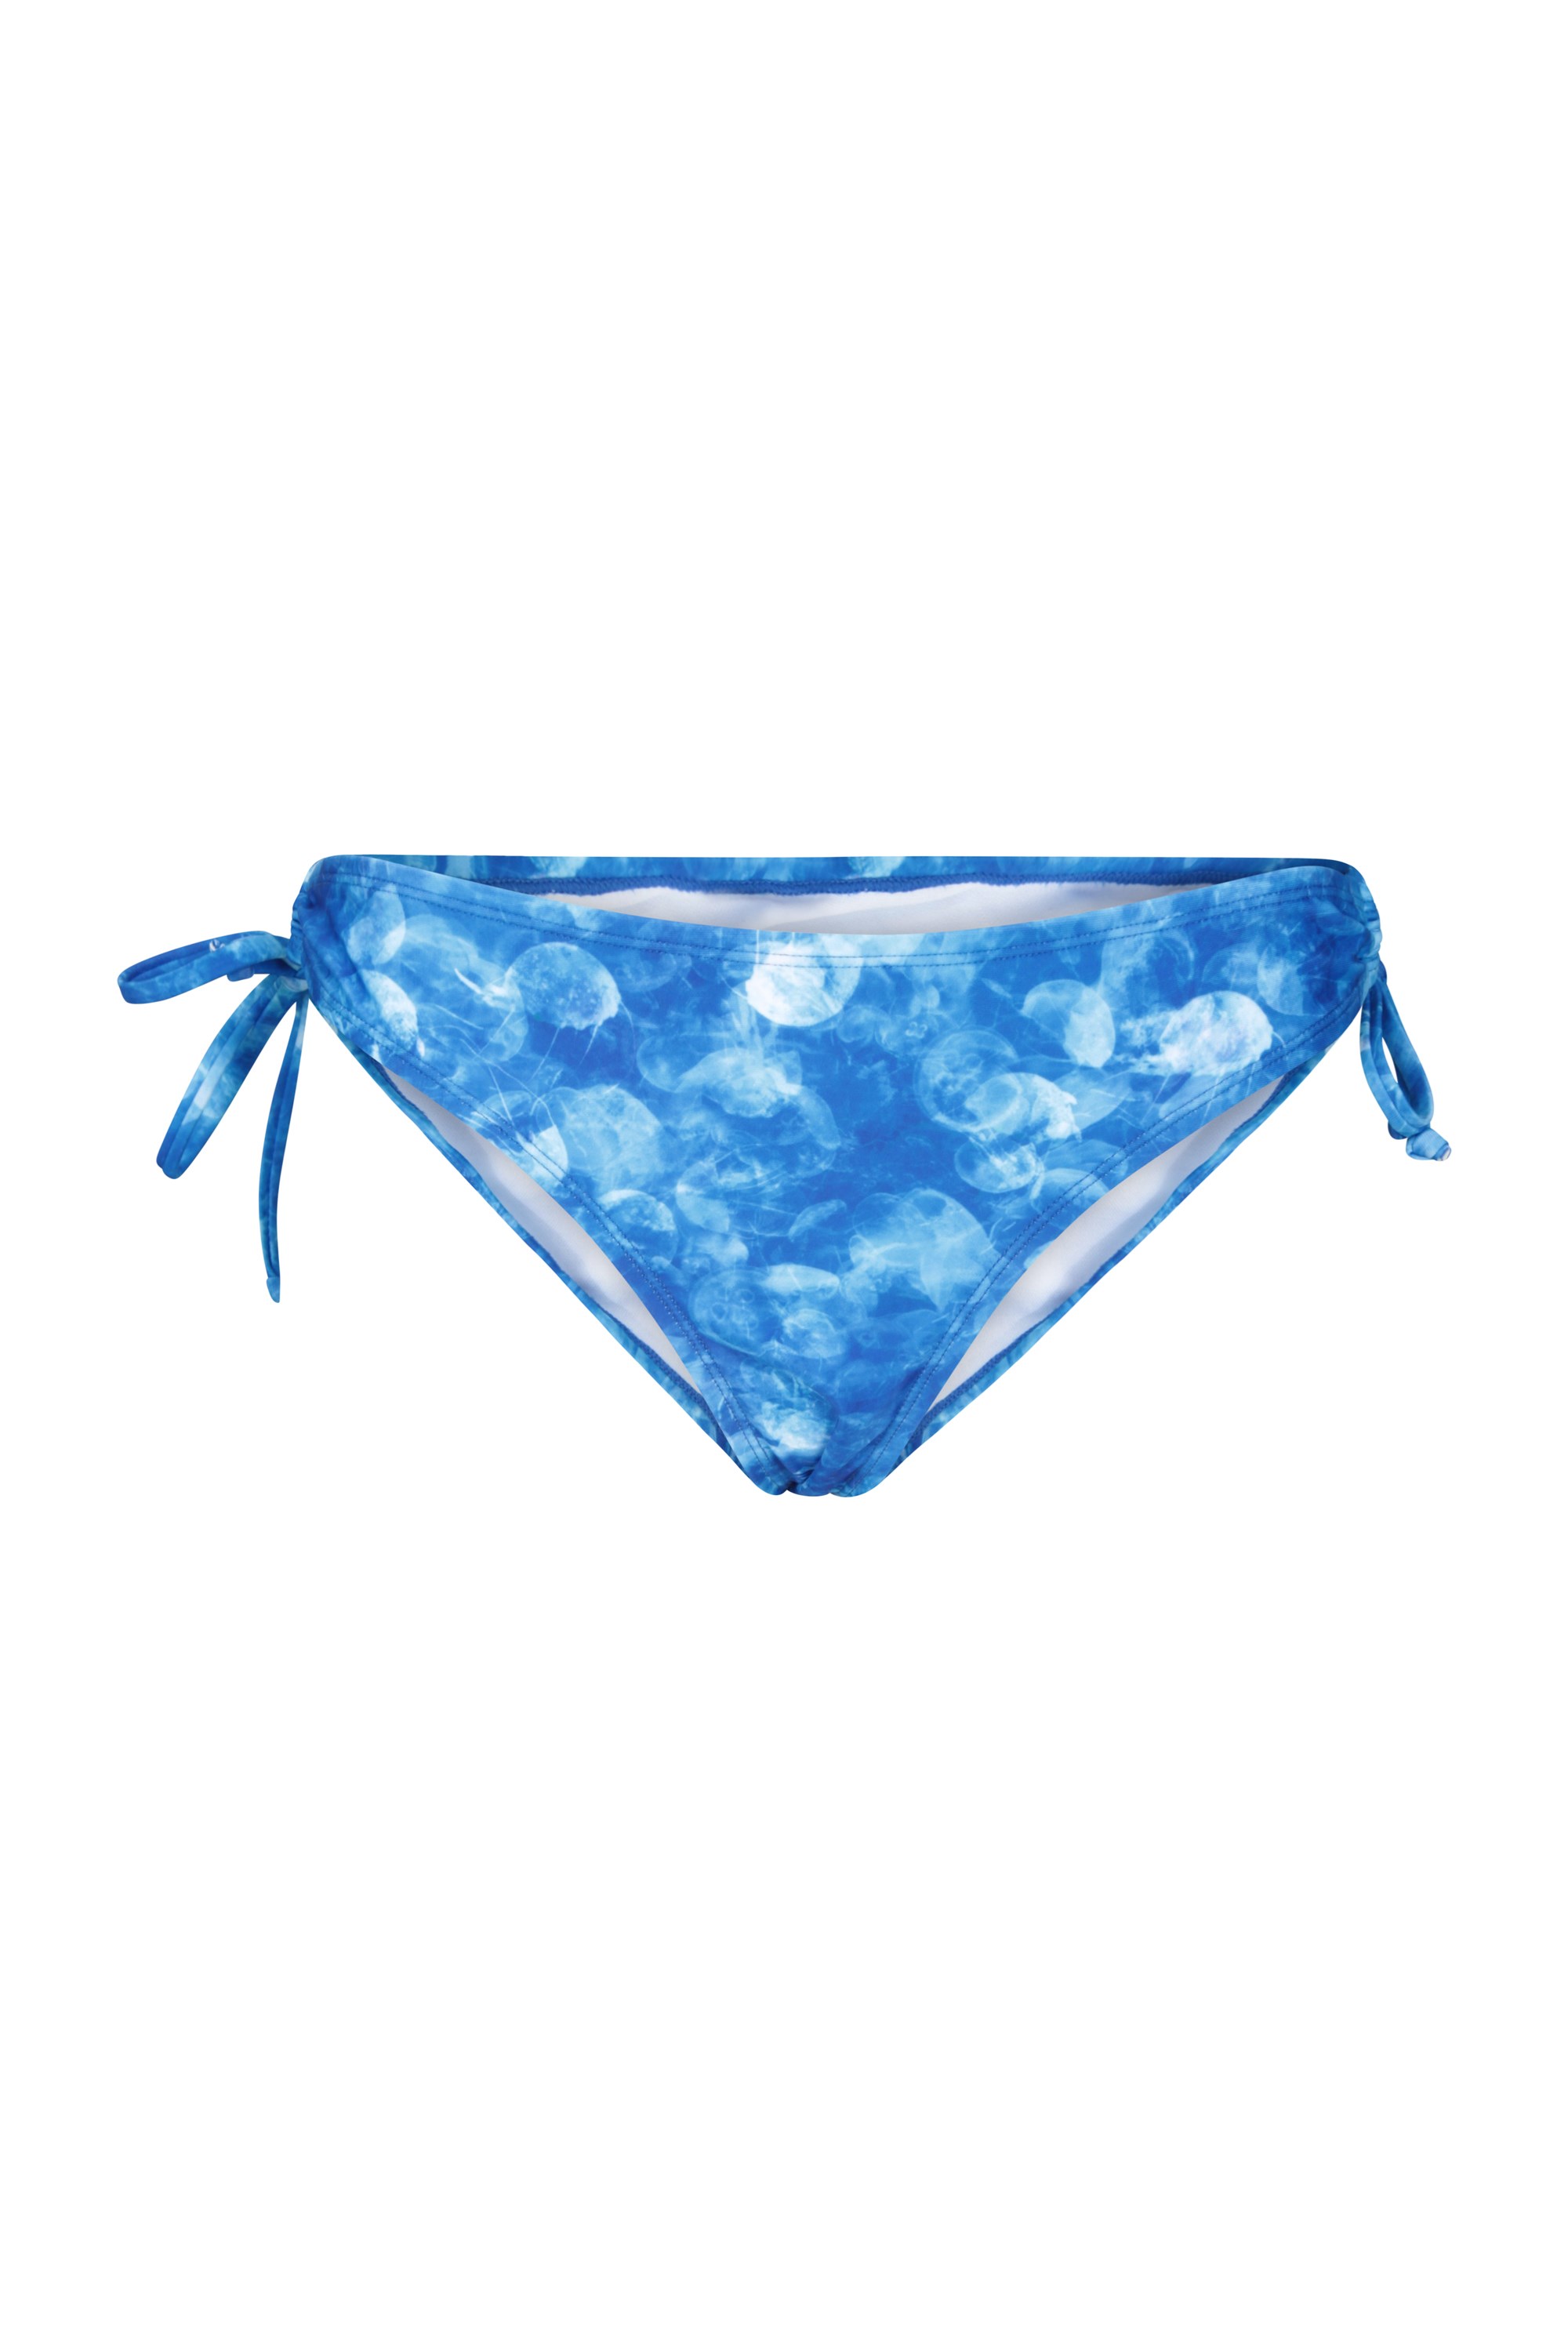 Bas de Bikini réglable South Beach - Bleu